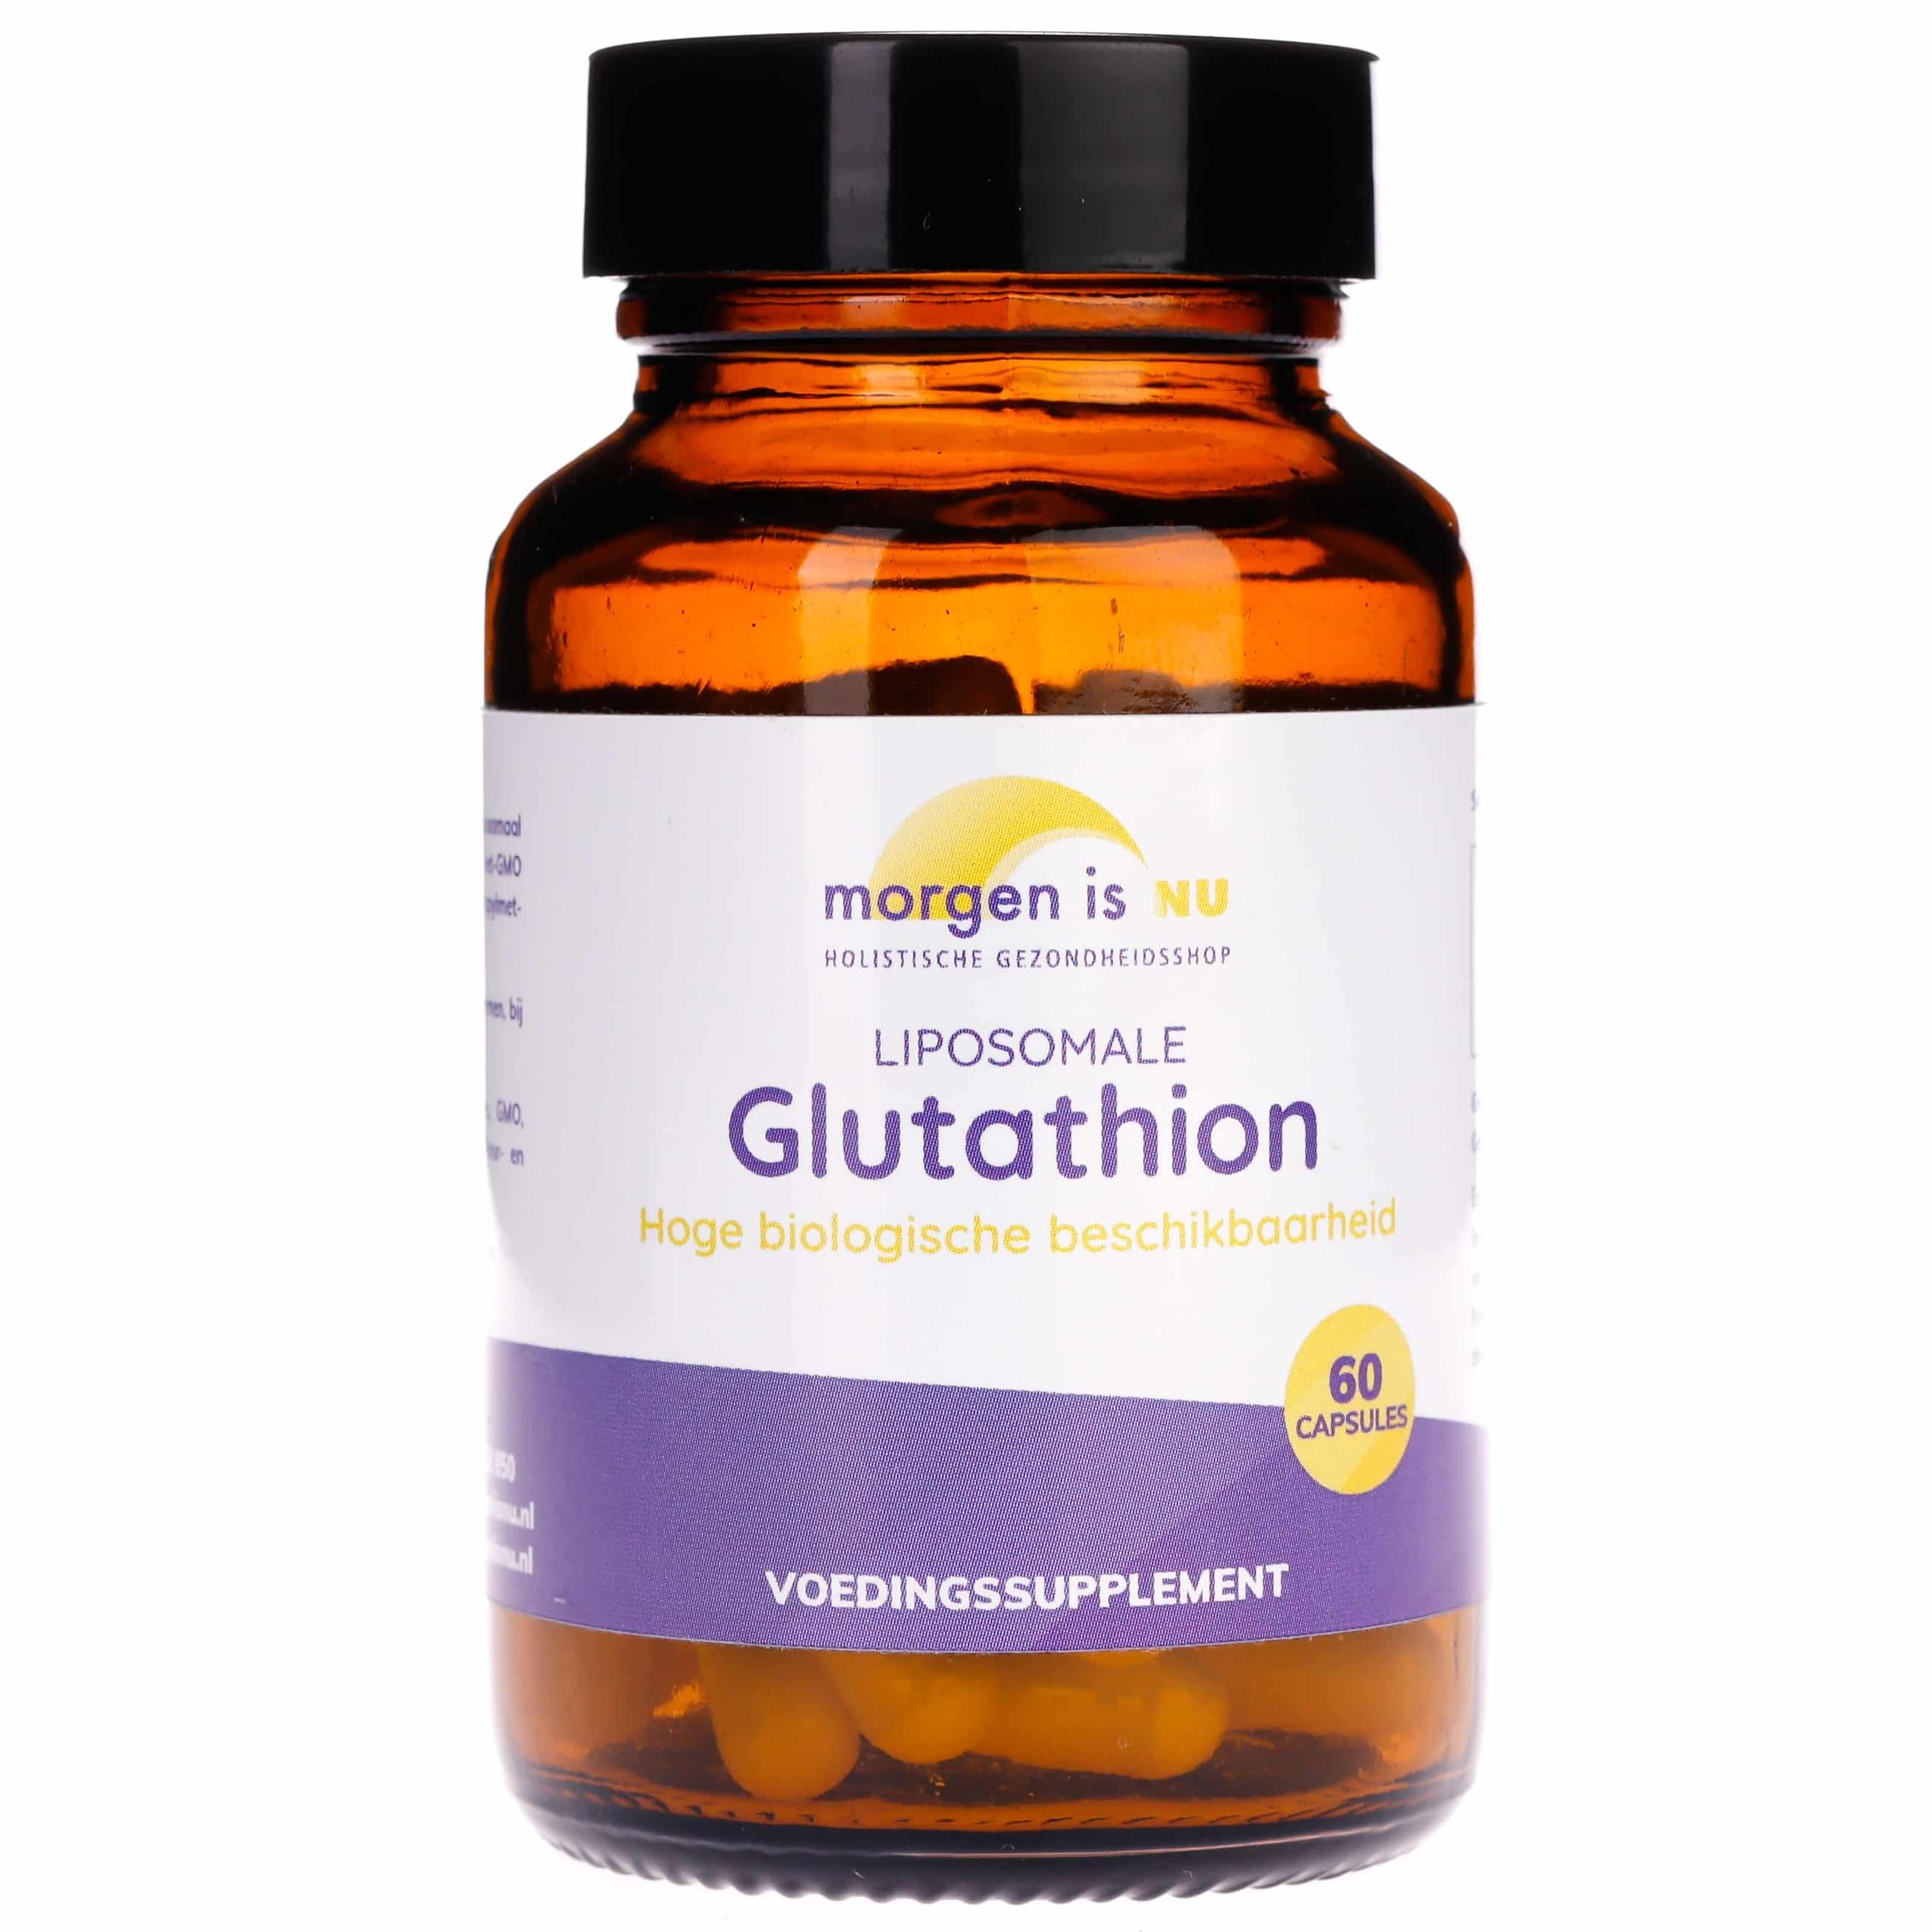 Liposomale Glutathion - Morgen is Nu